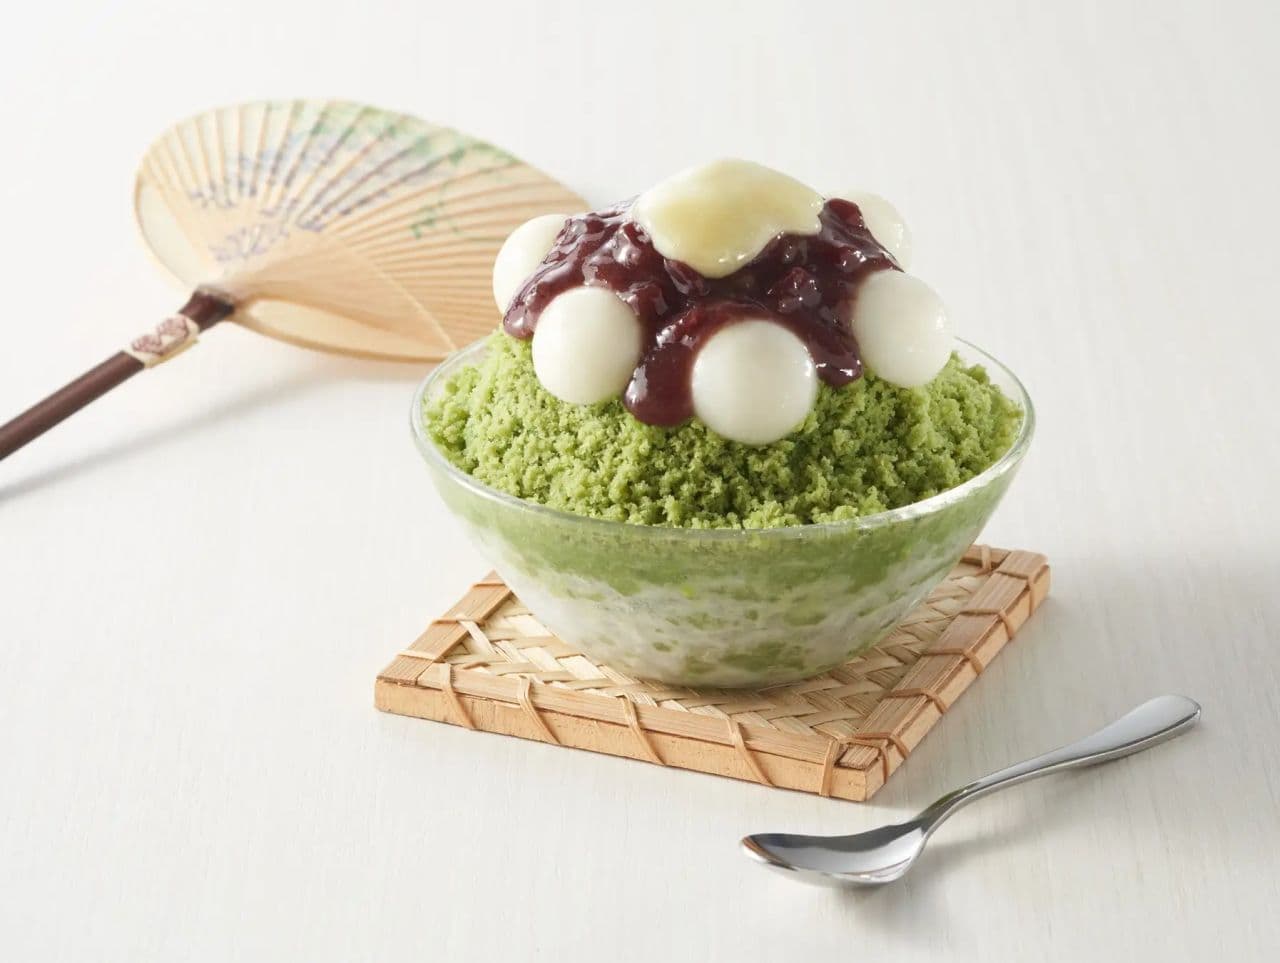 Imuraya "Yawamochi Ice Cream with Green Tea Ice